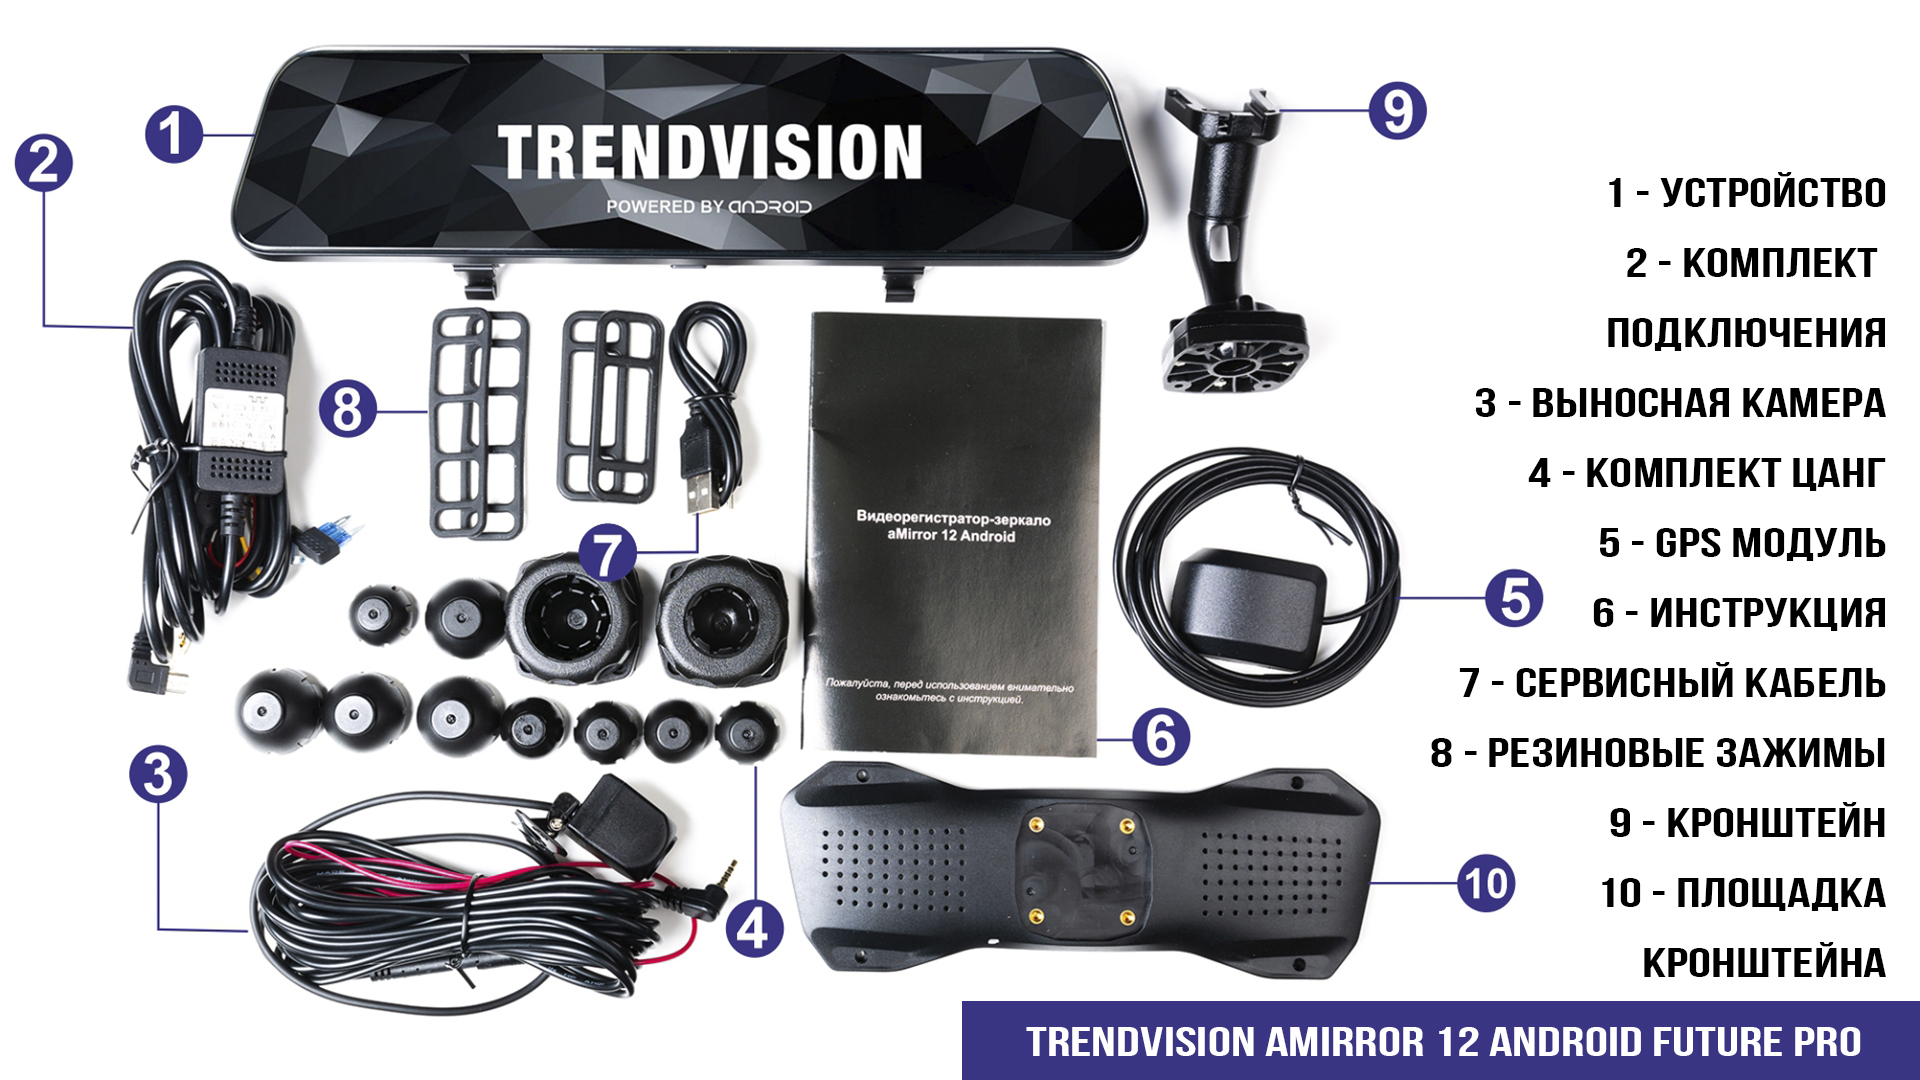 Trendvision amirror 12 android future pro обзор